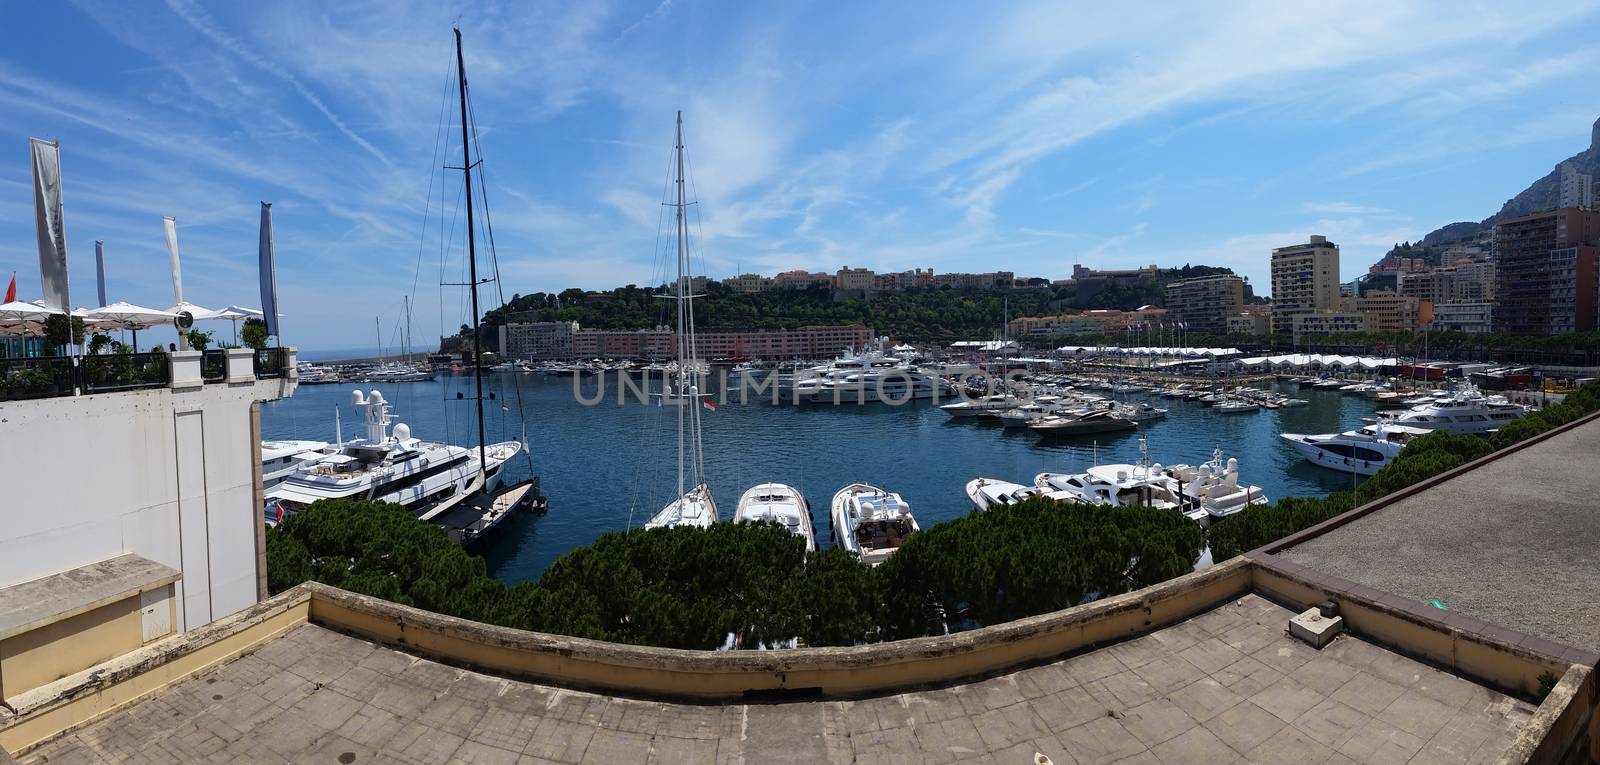 Luxurious yachts in Port Hercule, Monaco